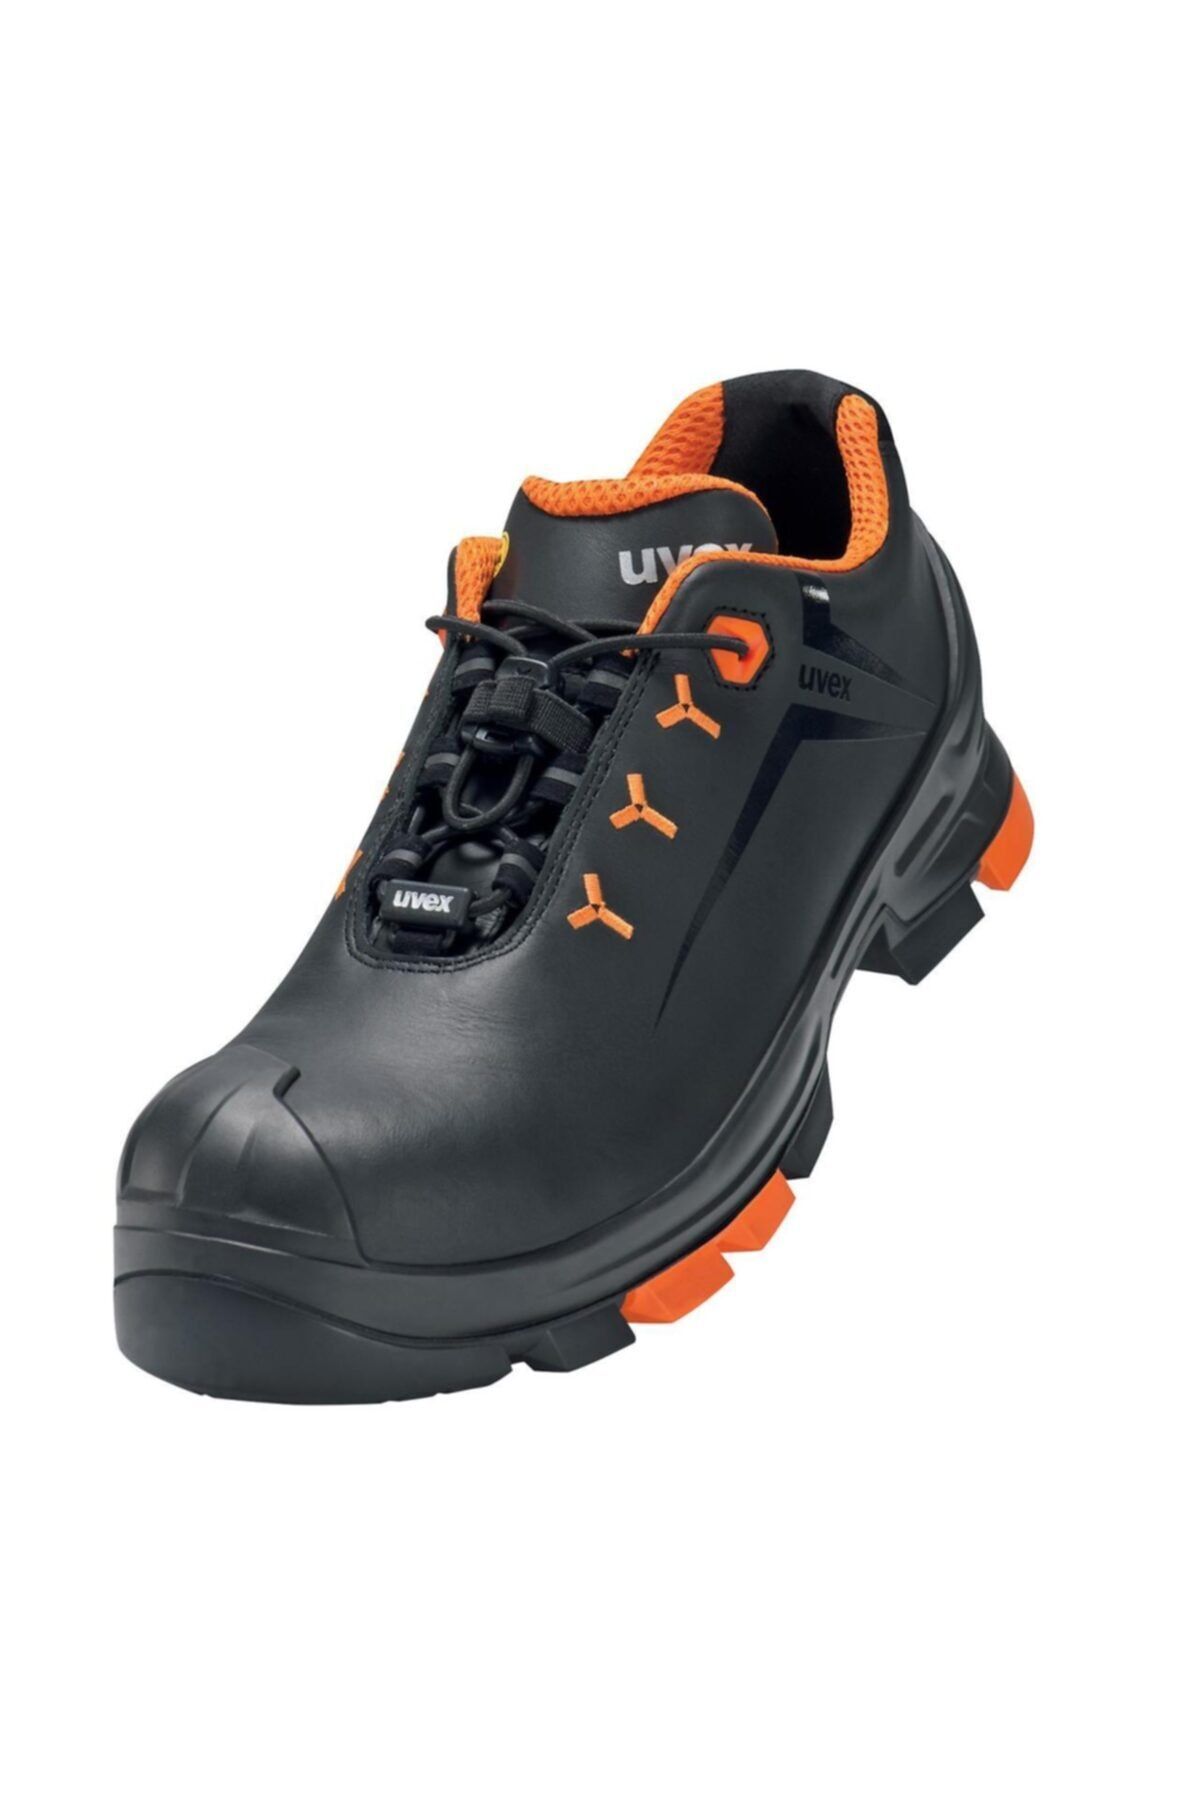 Uvex Unisex Iş Ayakkabısı 2 6502 S3 Src Esd